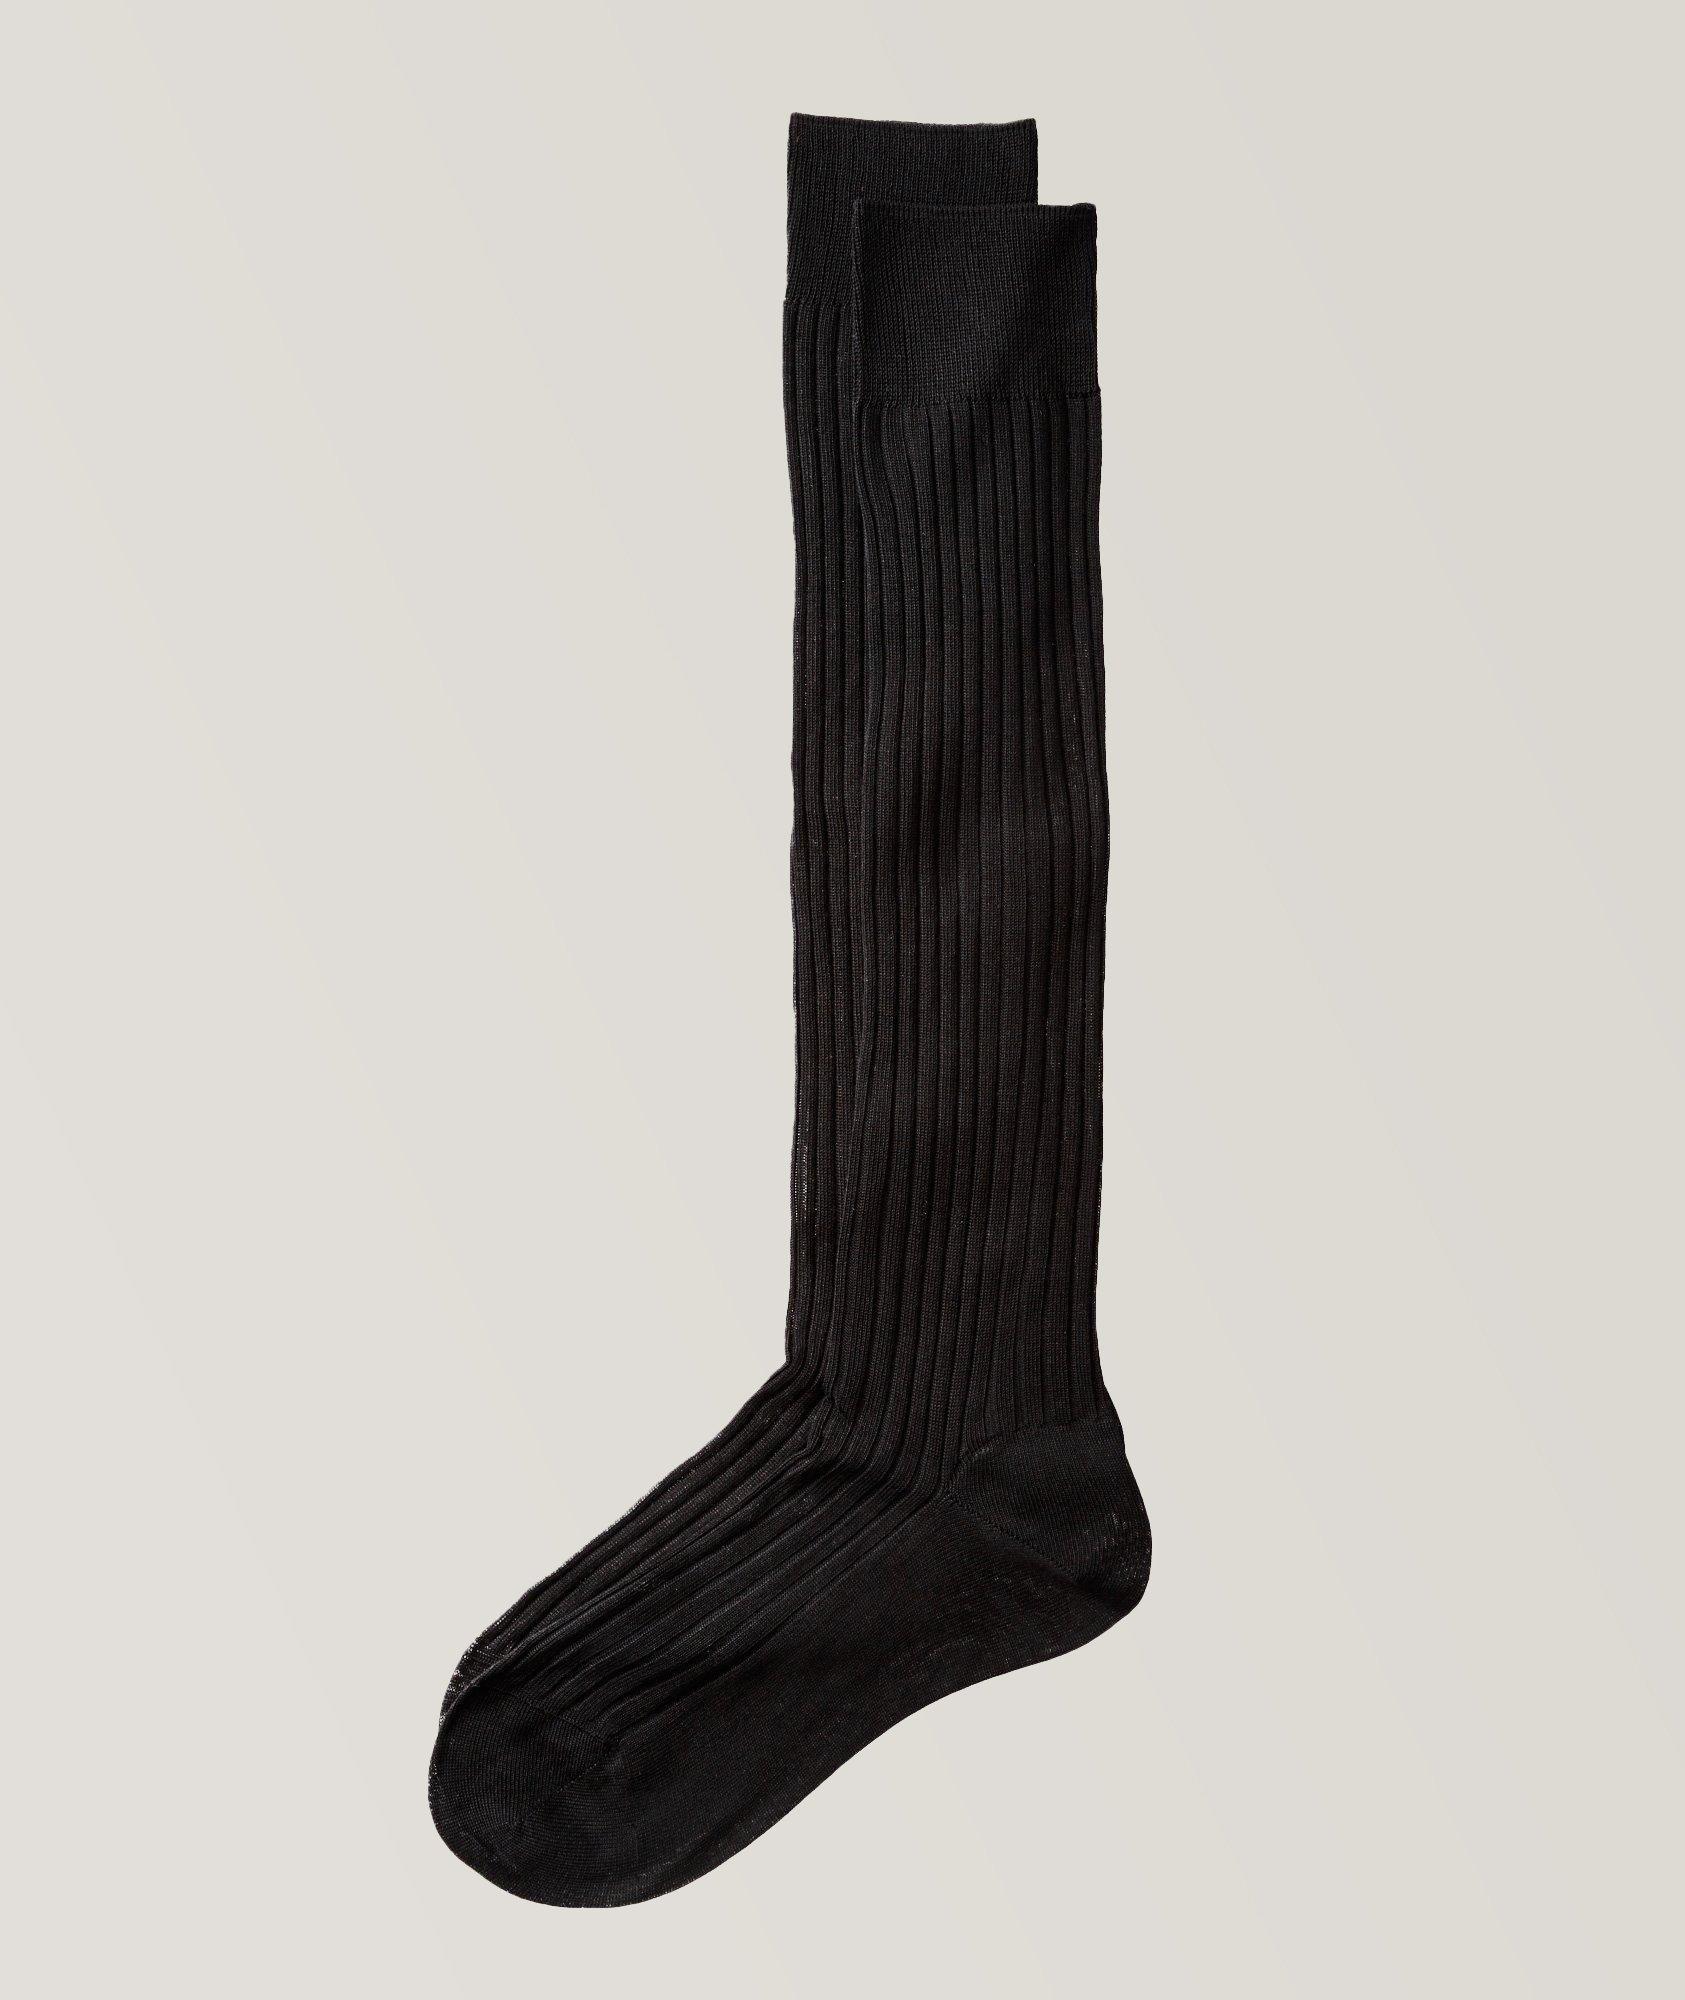 Pantherella Ribbed Knit Dress Socks | Socks | Harry Rosen